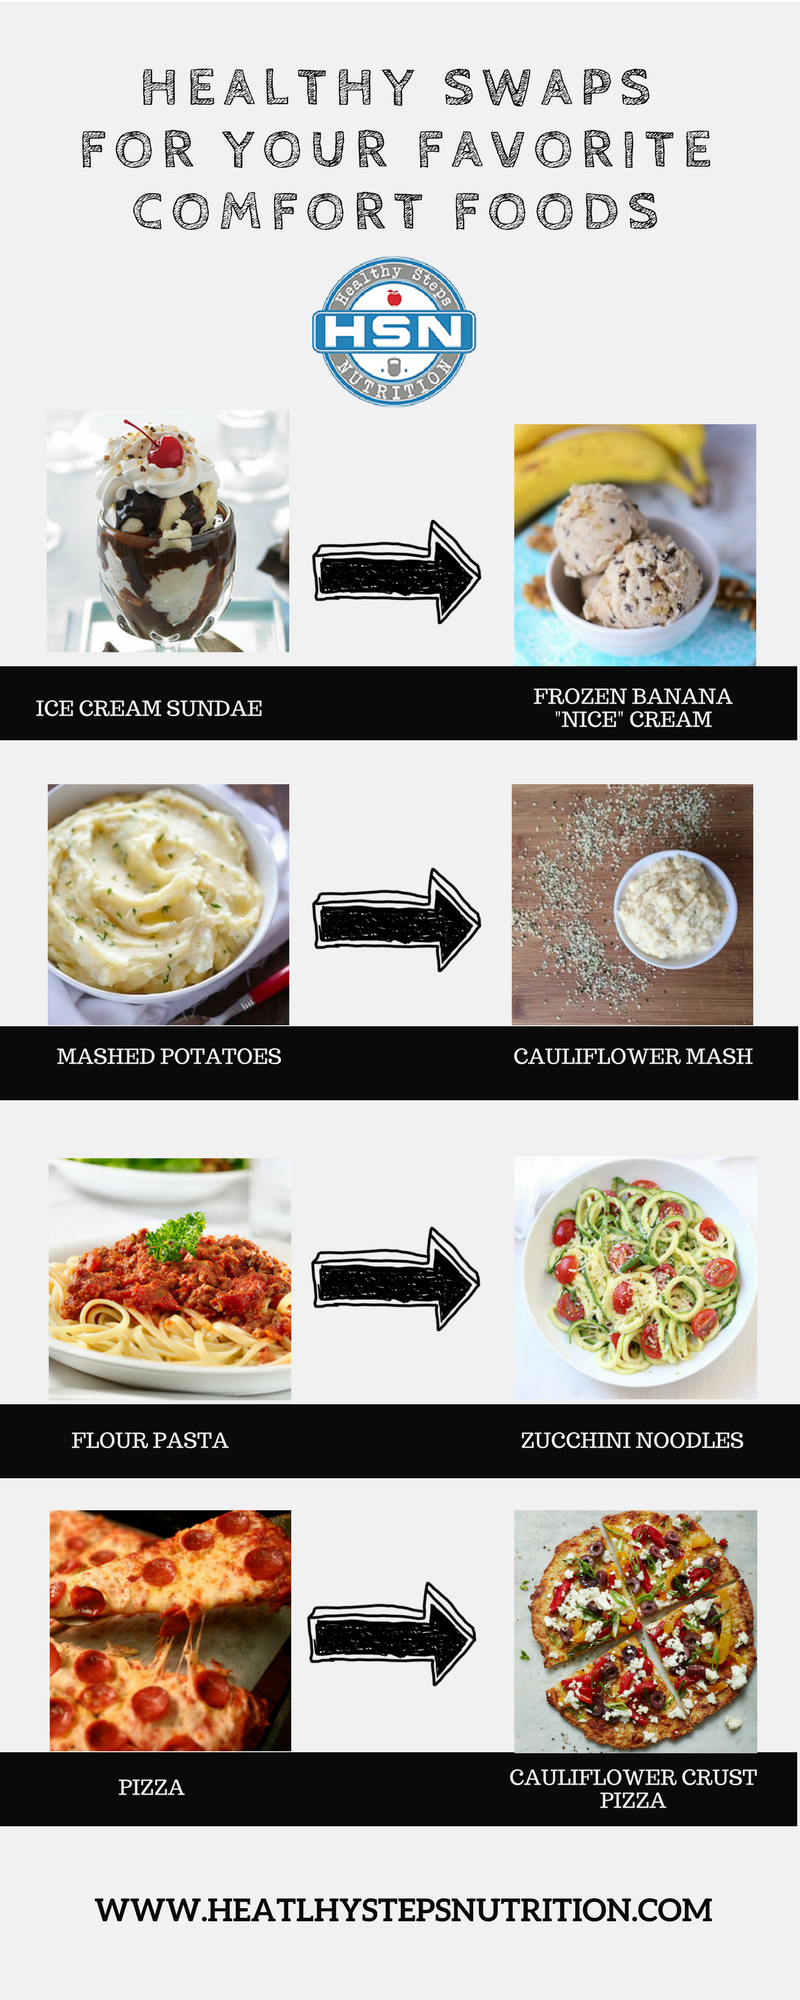 Infographic: 4 Ingredient Swaps to Make Healthy Comfort Food You Love | Vitacost.com/blog